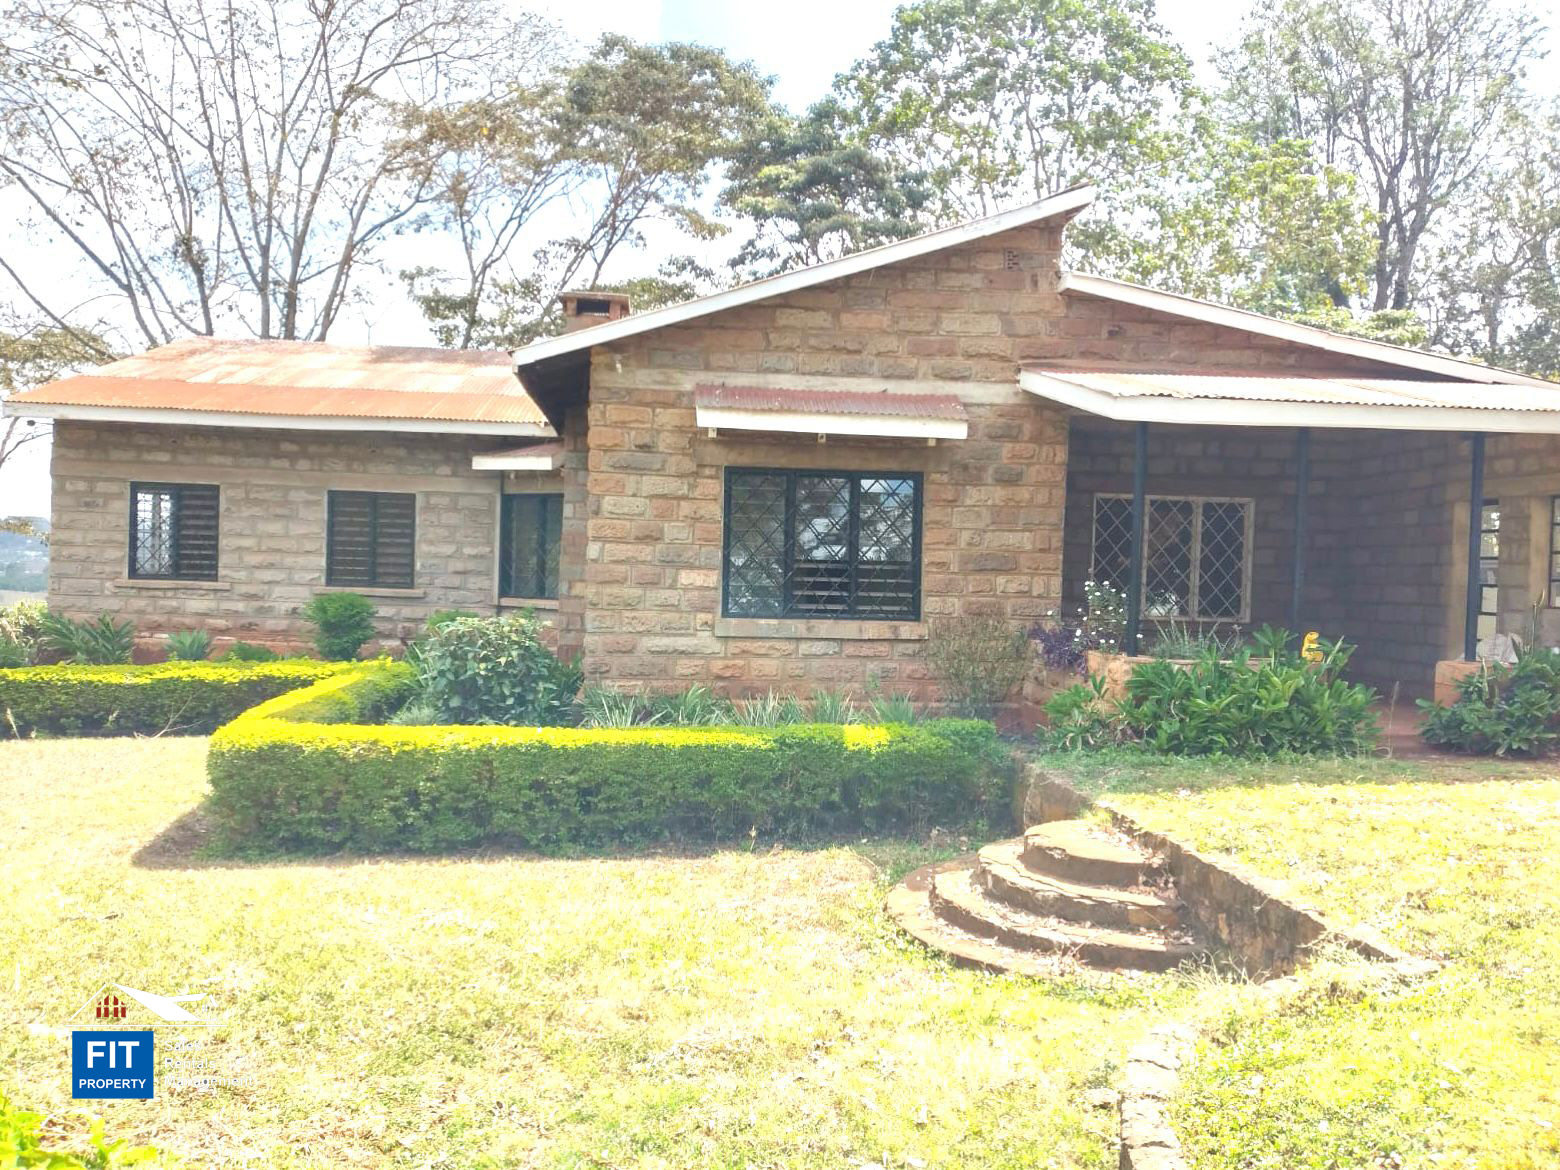 3 Bedroom Farm House for rent, Kamiti Road, Kiambu